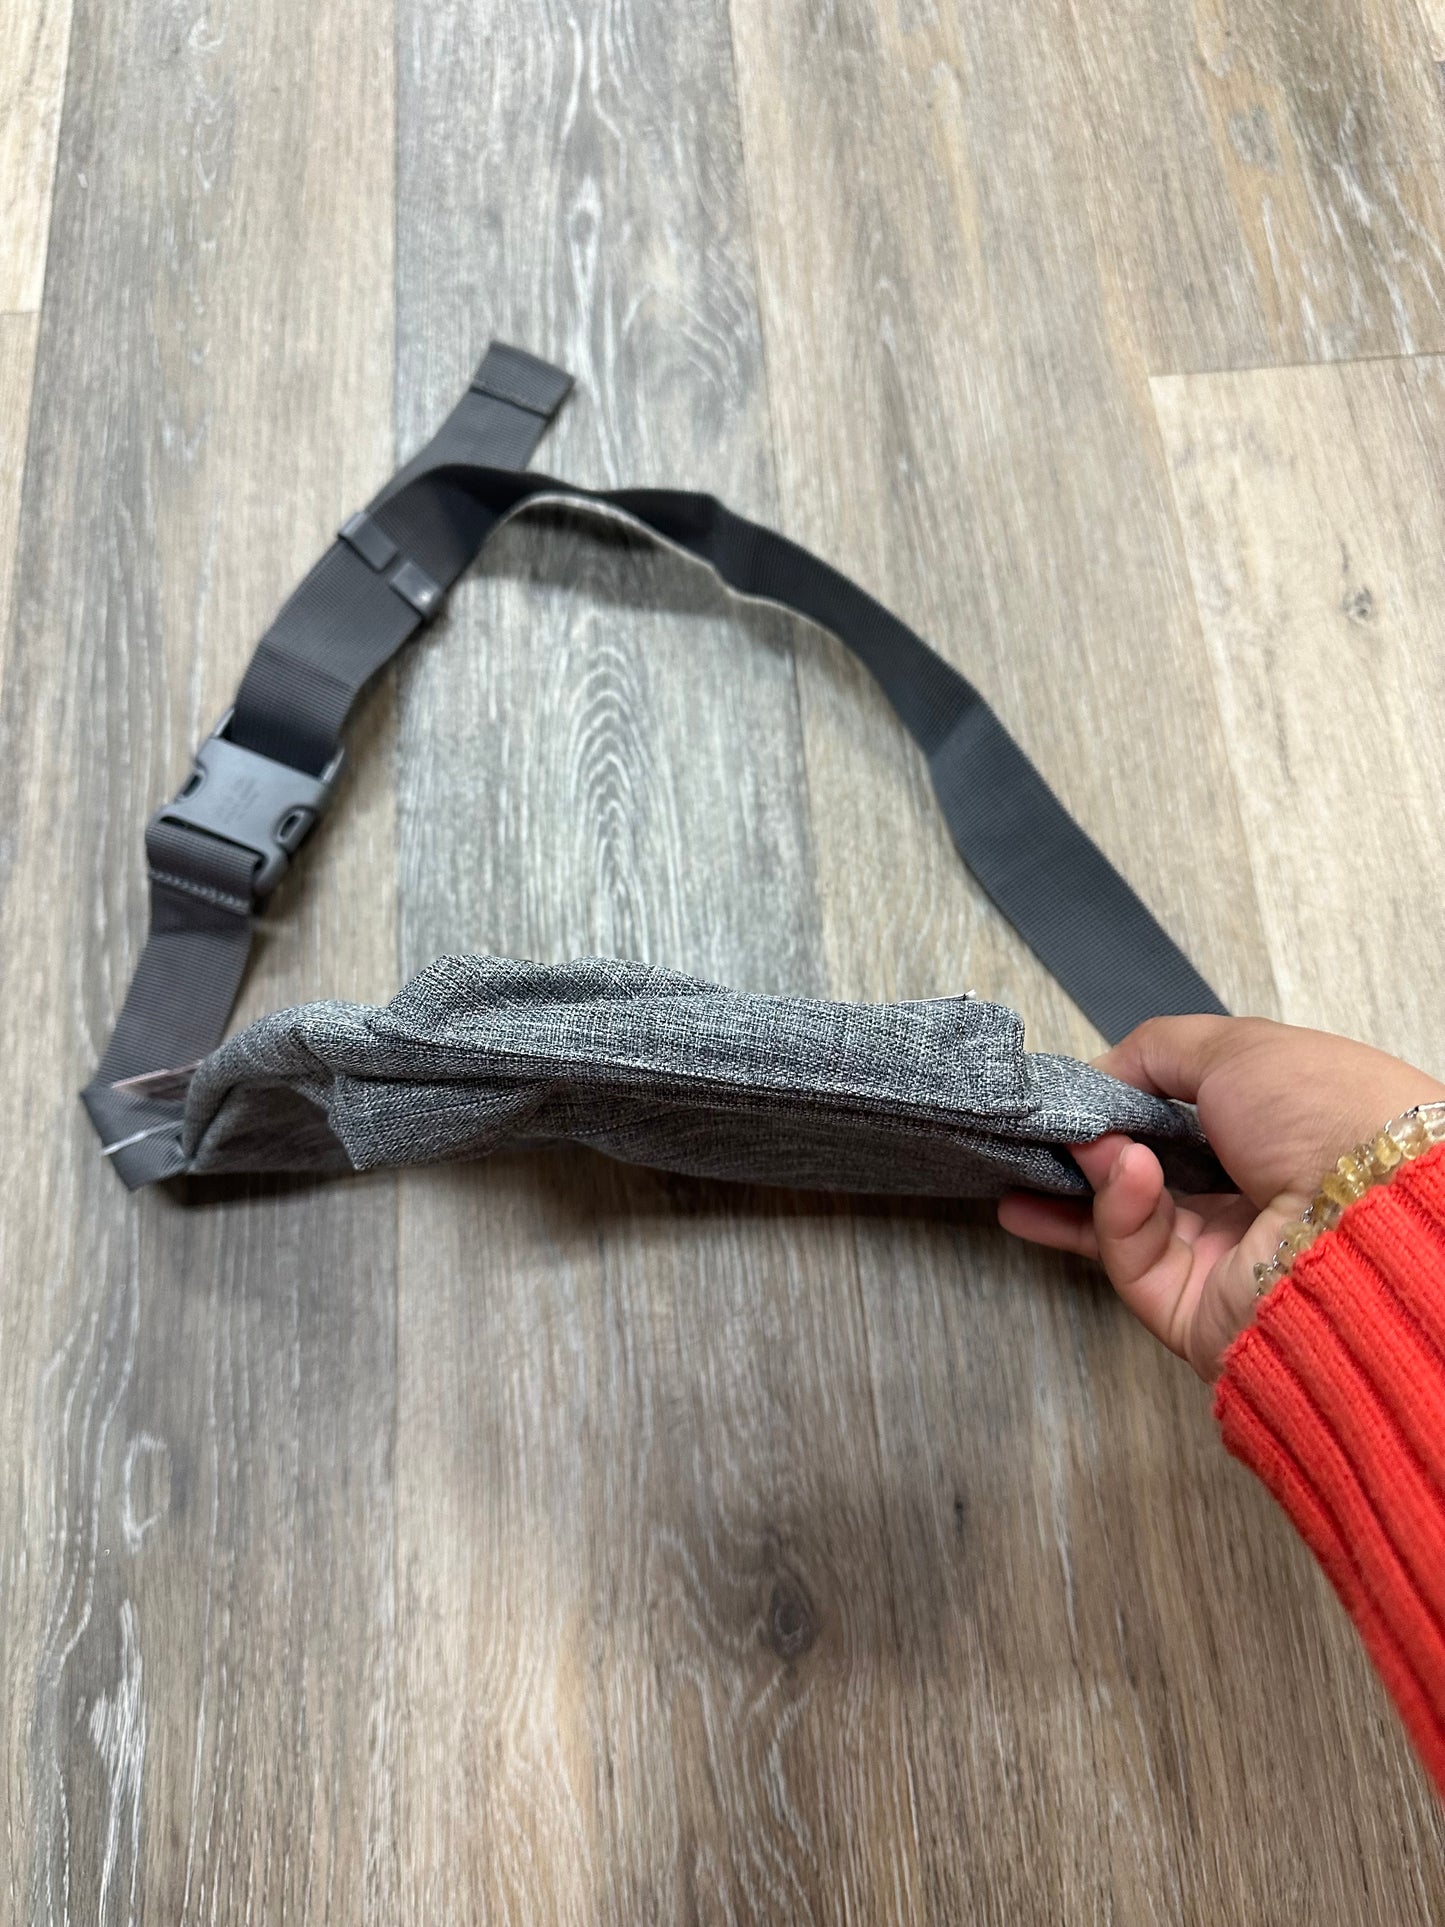 Belt Bag By Herschel  Size: Medium